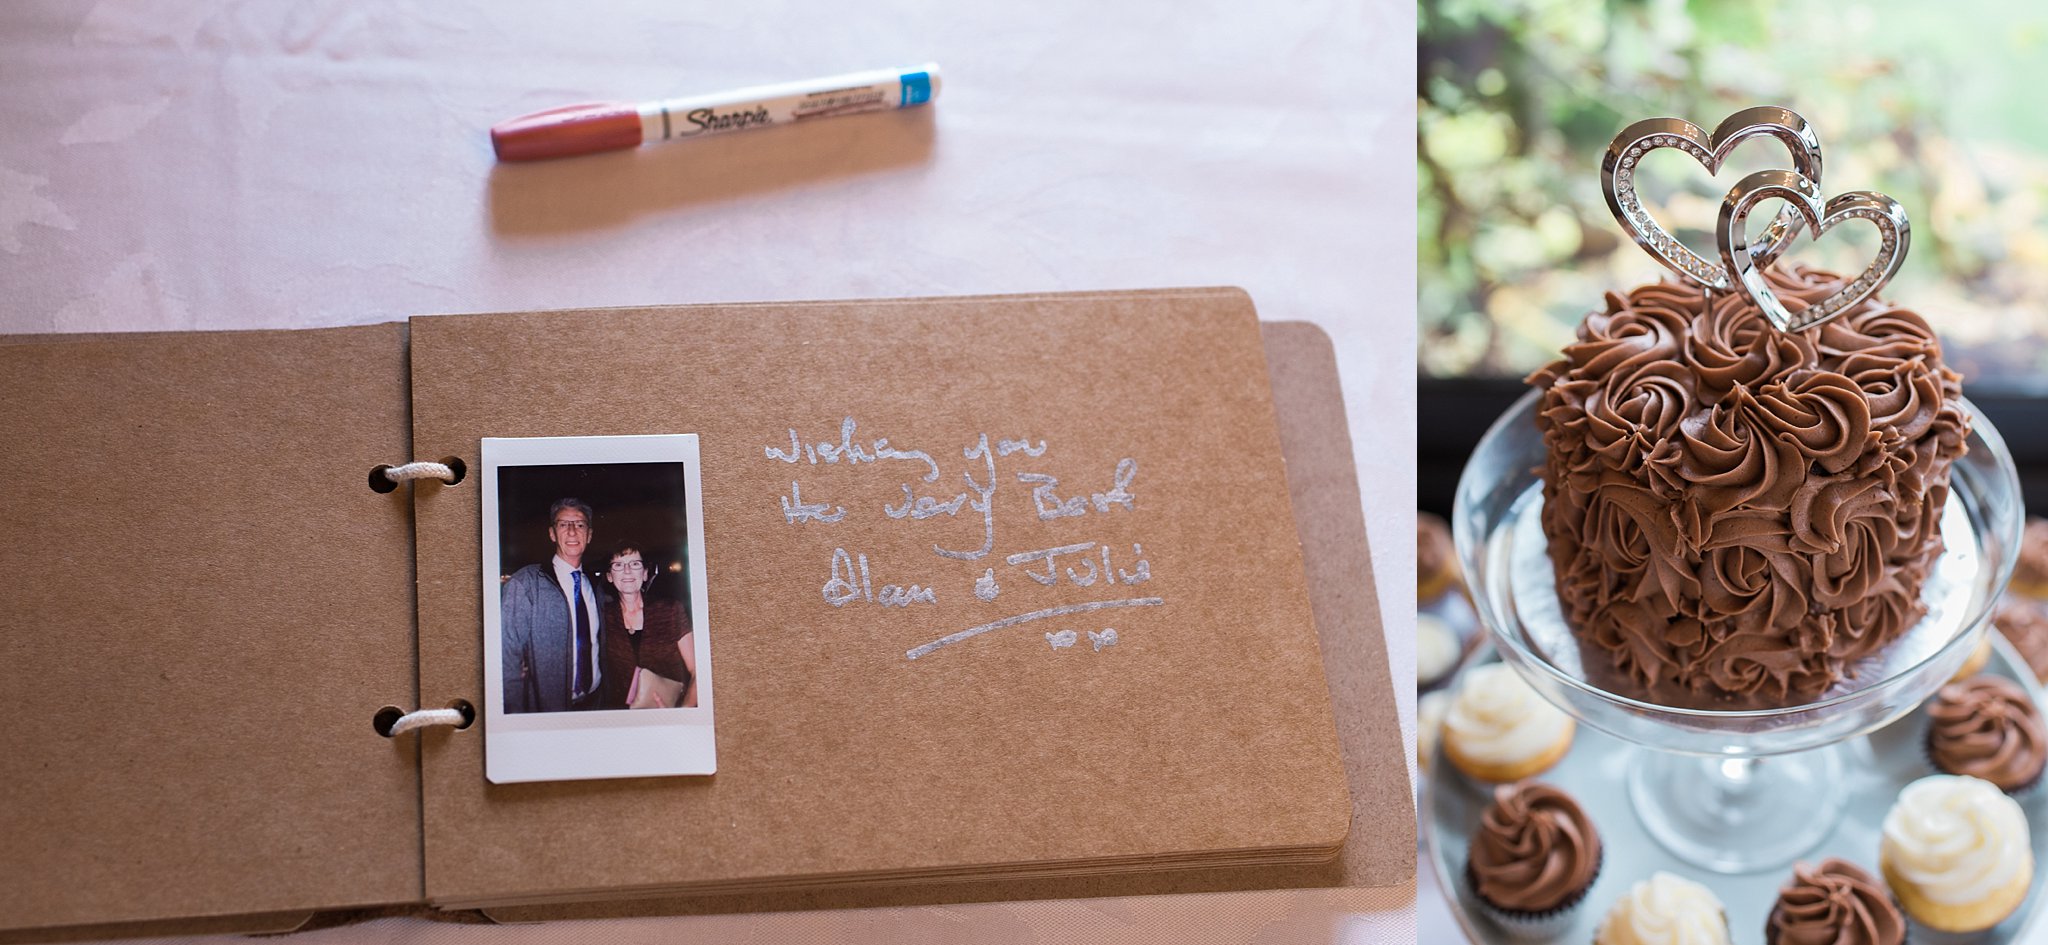 Jennifer Blaak Photography, Toronto Wedding Photographer, Pipers Heath Golf Club in Milton, Wedding Cake, Polaroid Guest Book